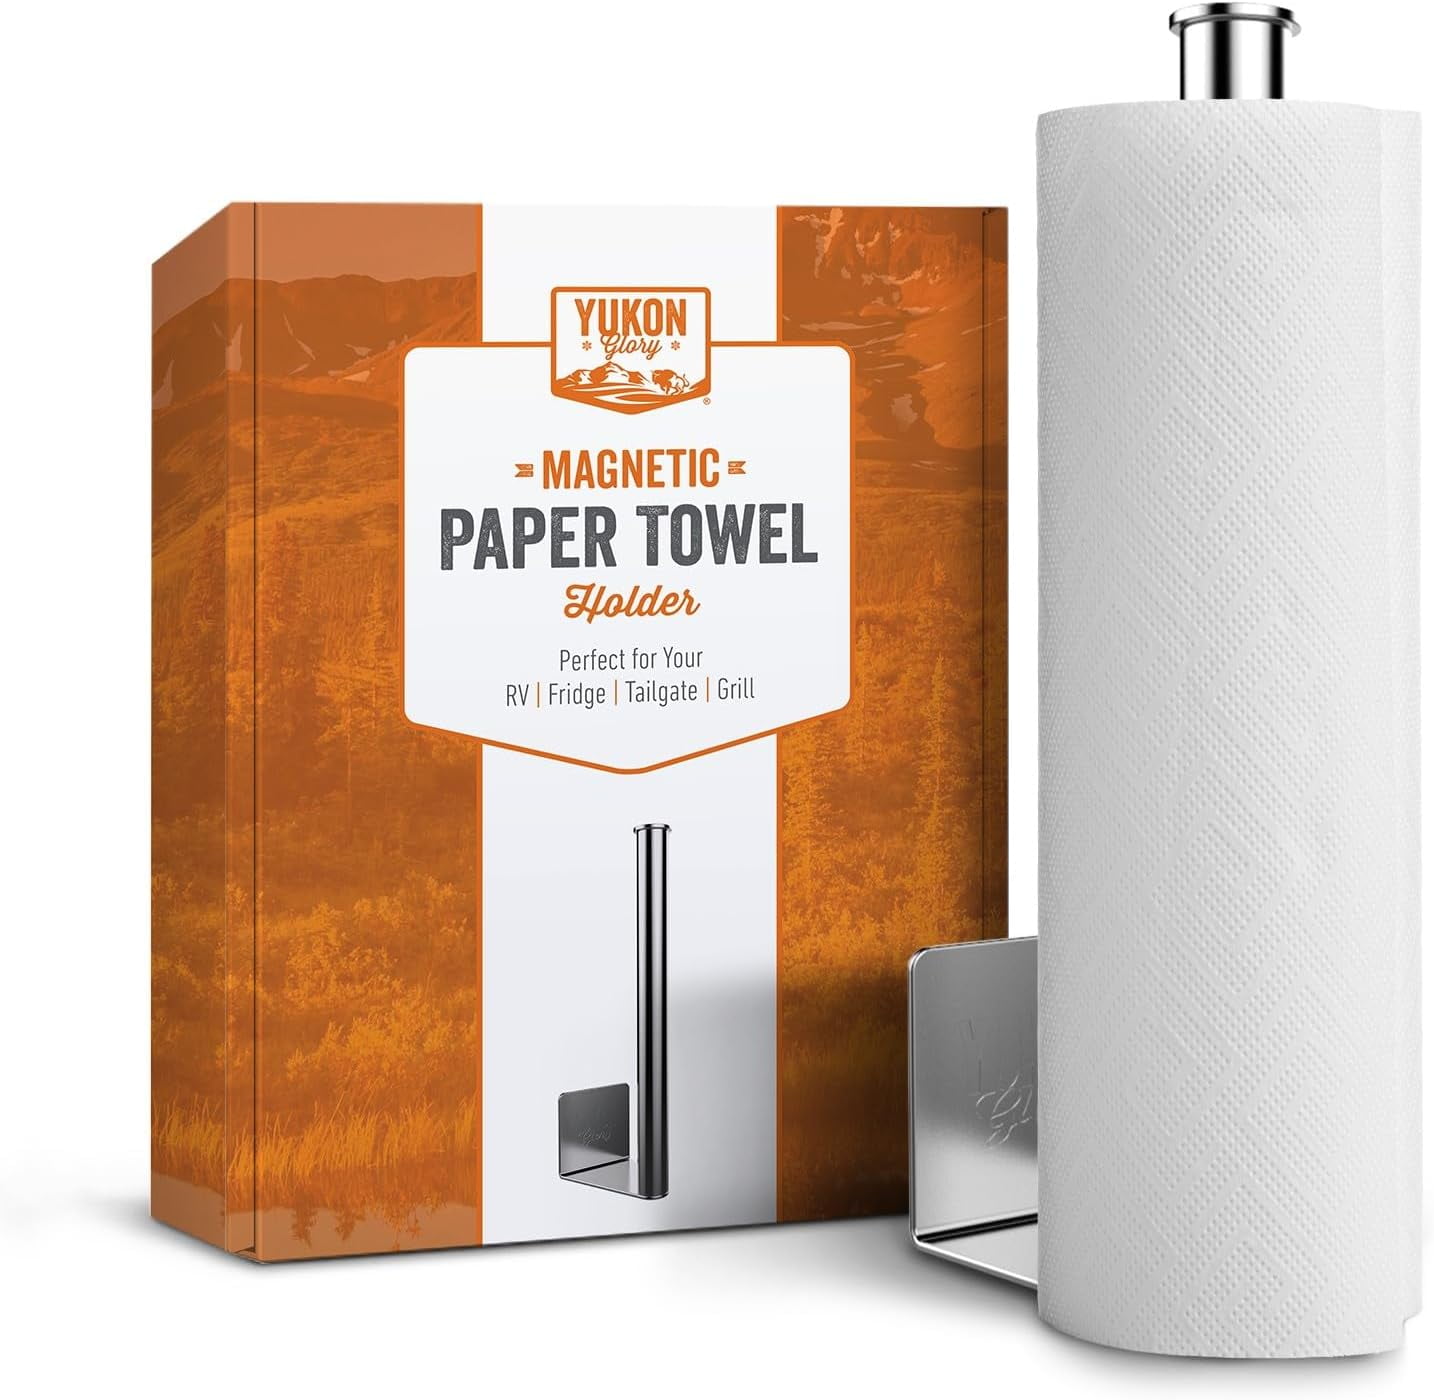 Steins Railroad Spike Paper Towel Holder, Countertop - High